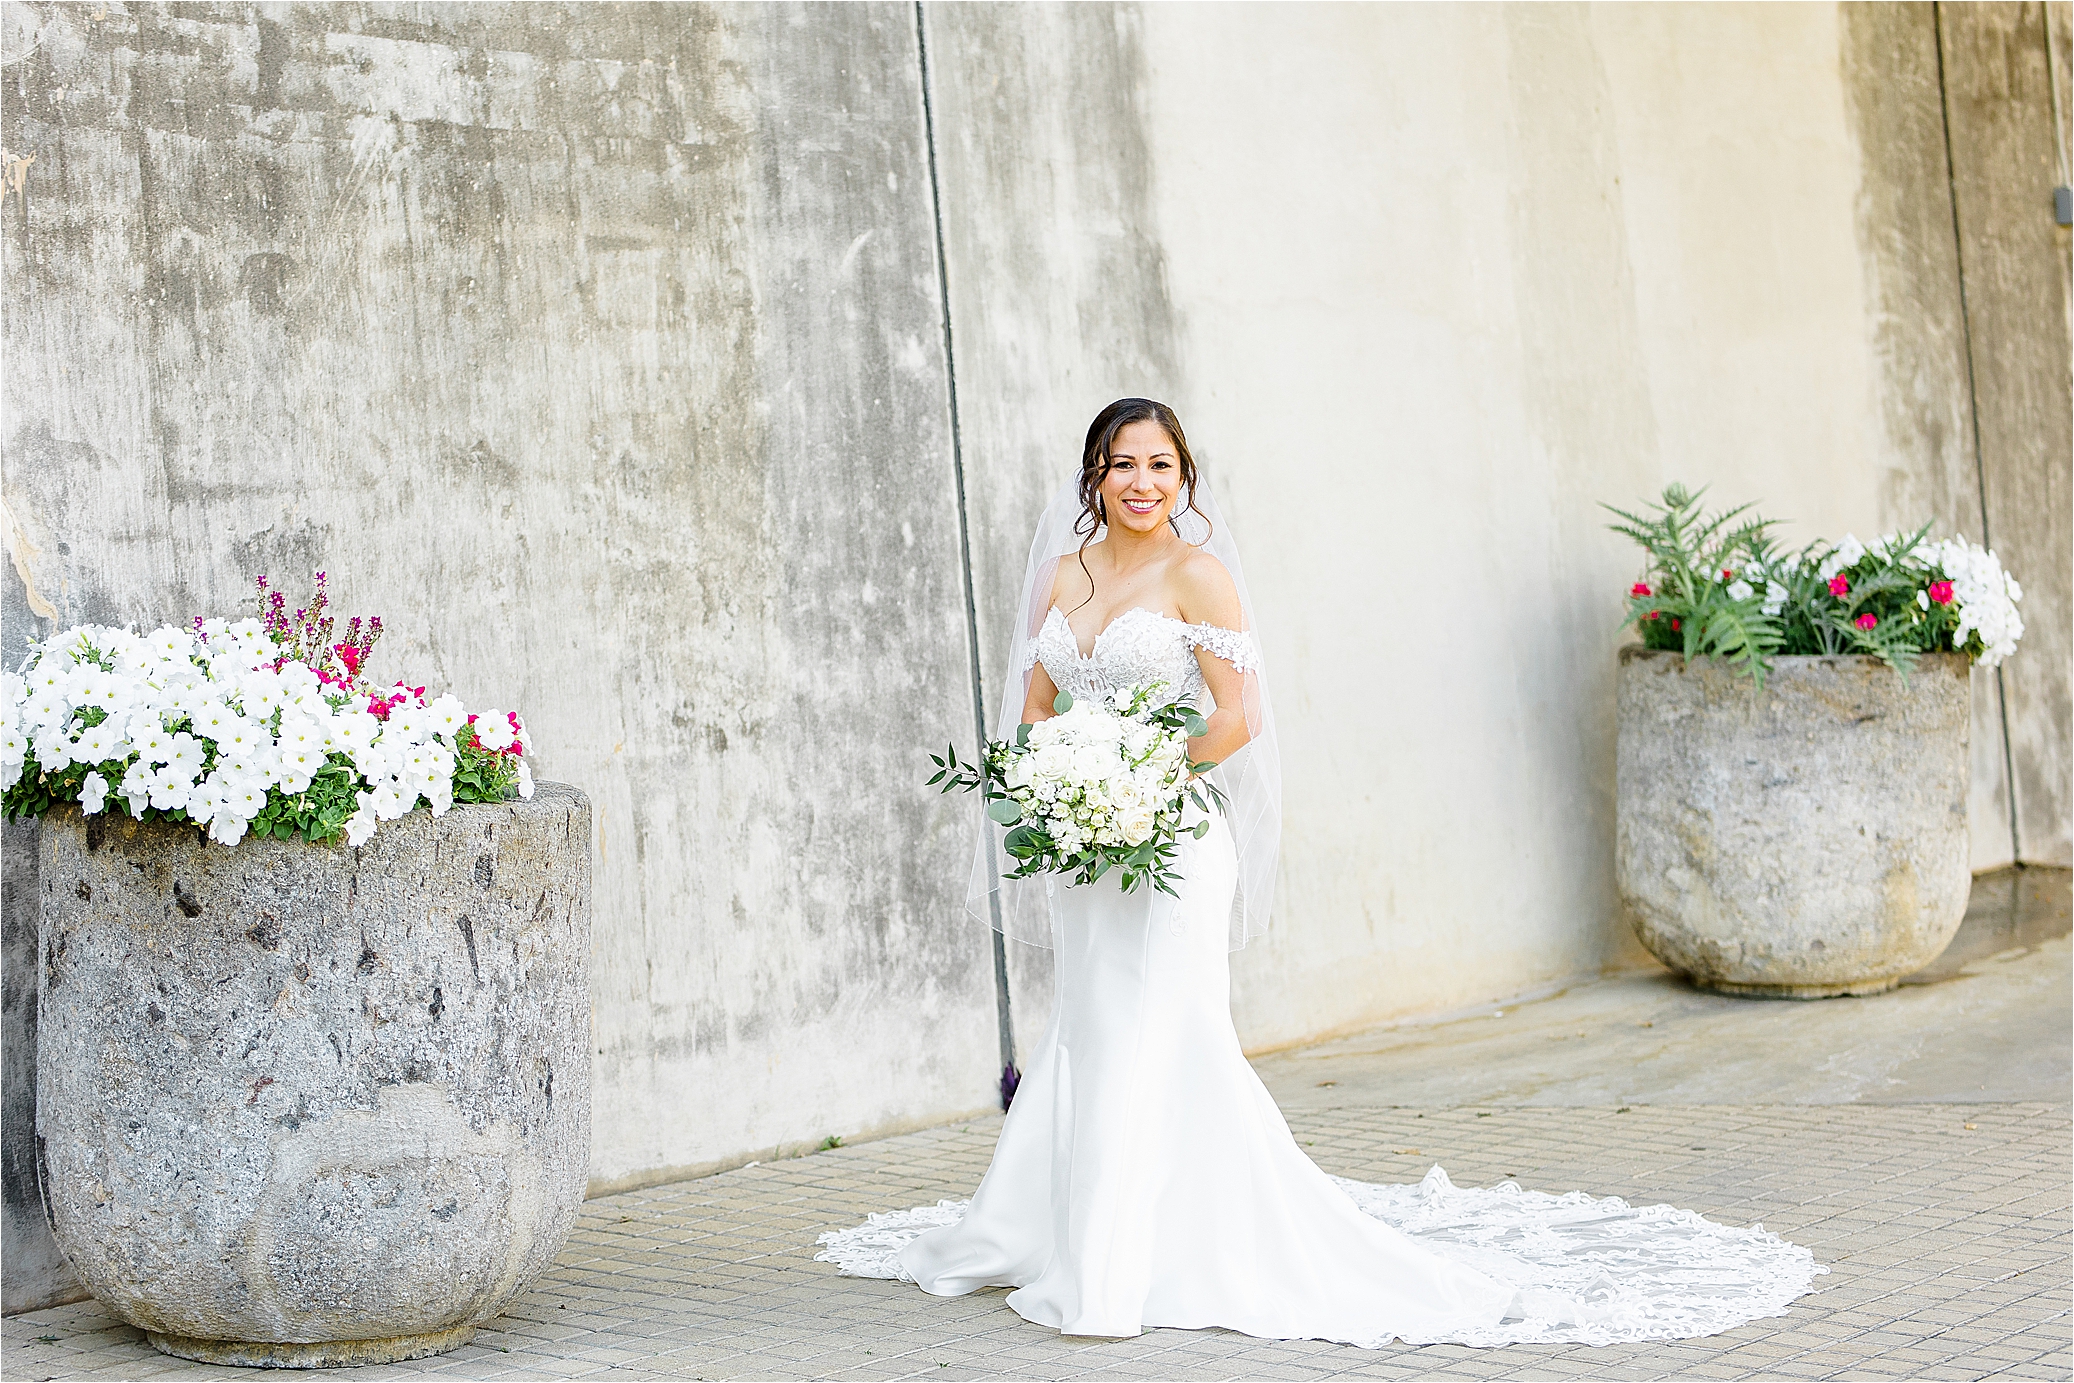 A bride smiles next to cement pillars of flowers during her spring bridal session at San Antonio Botanic Garden in San Antonio, Texas